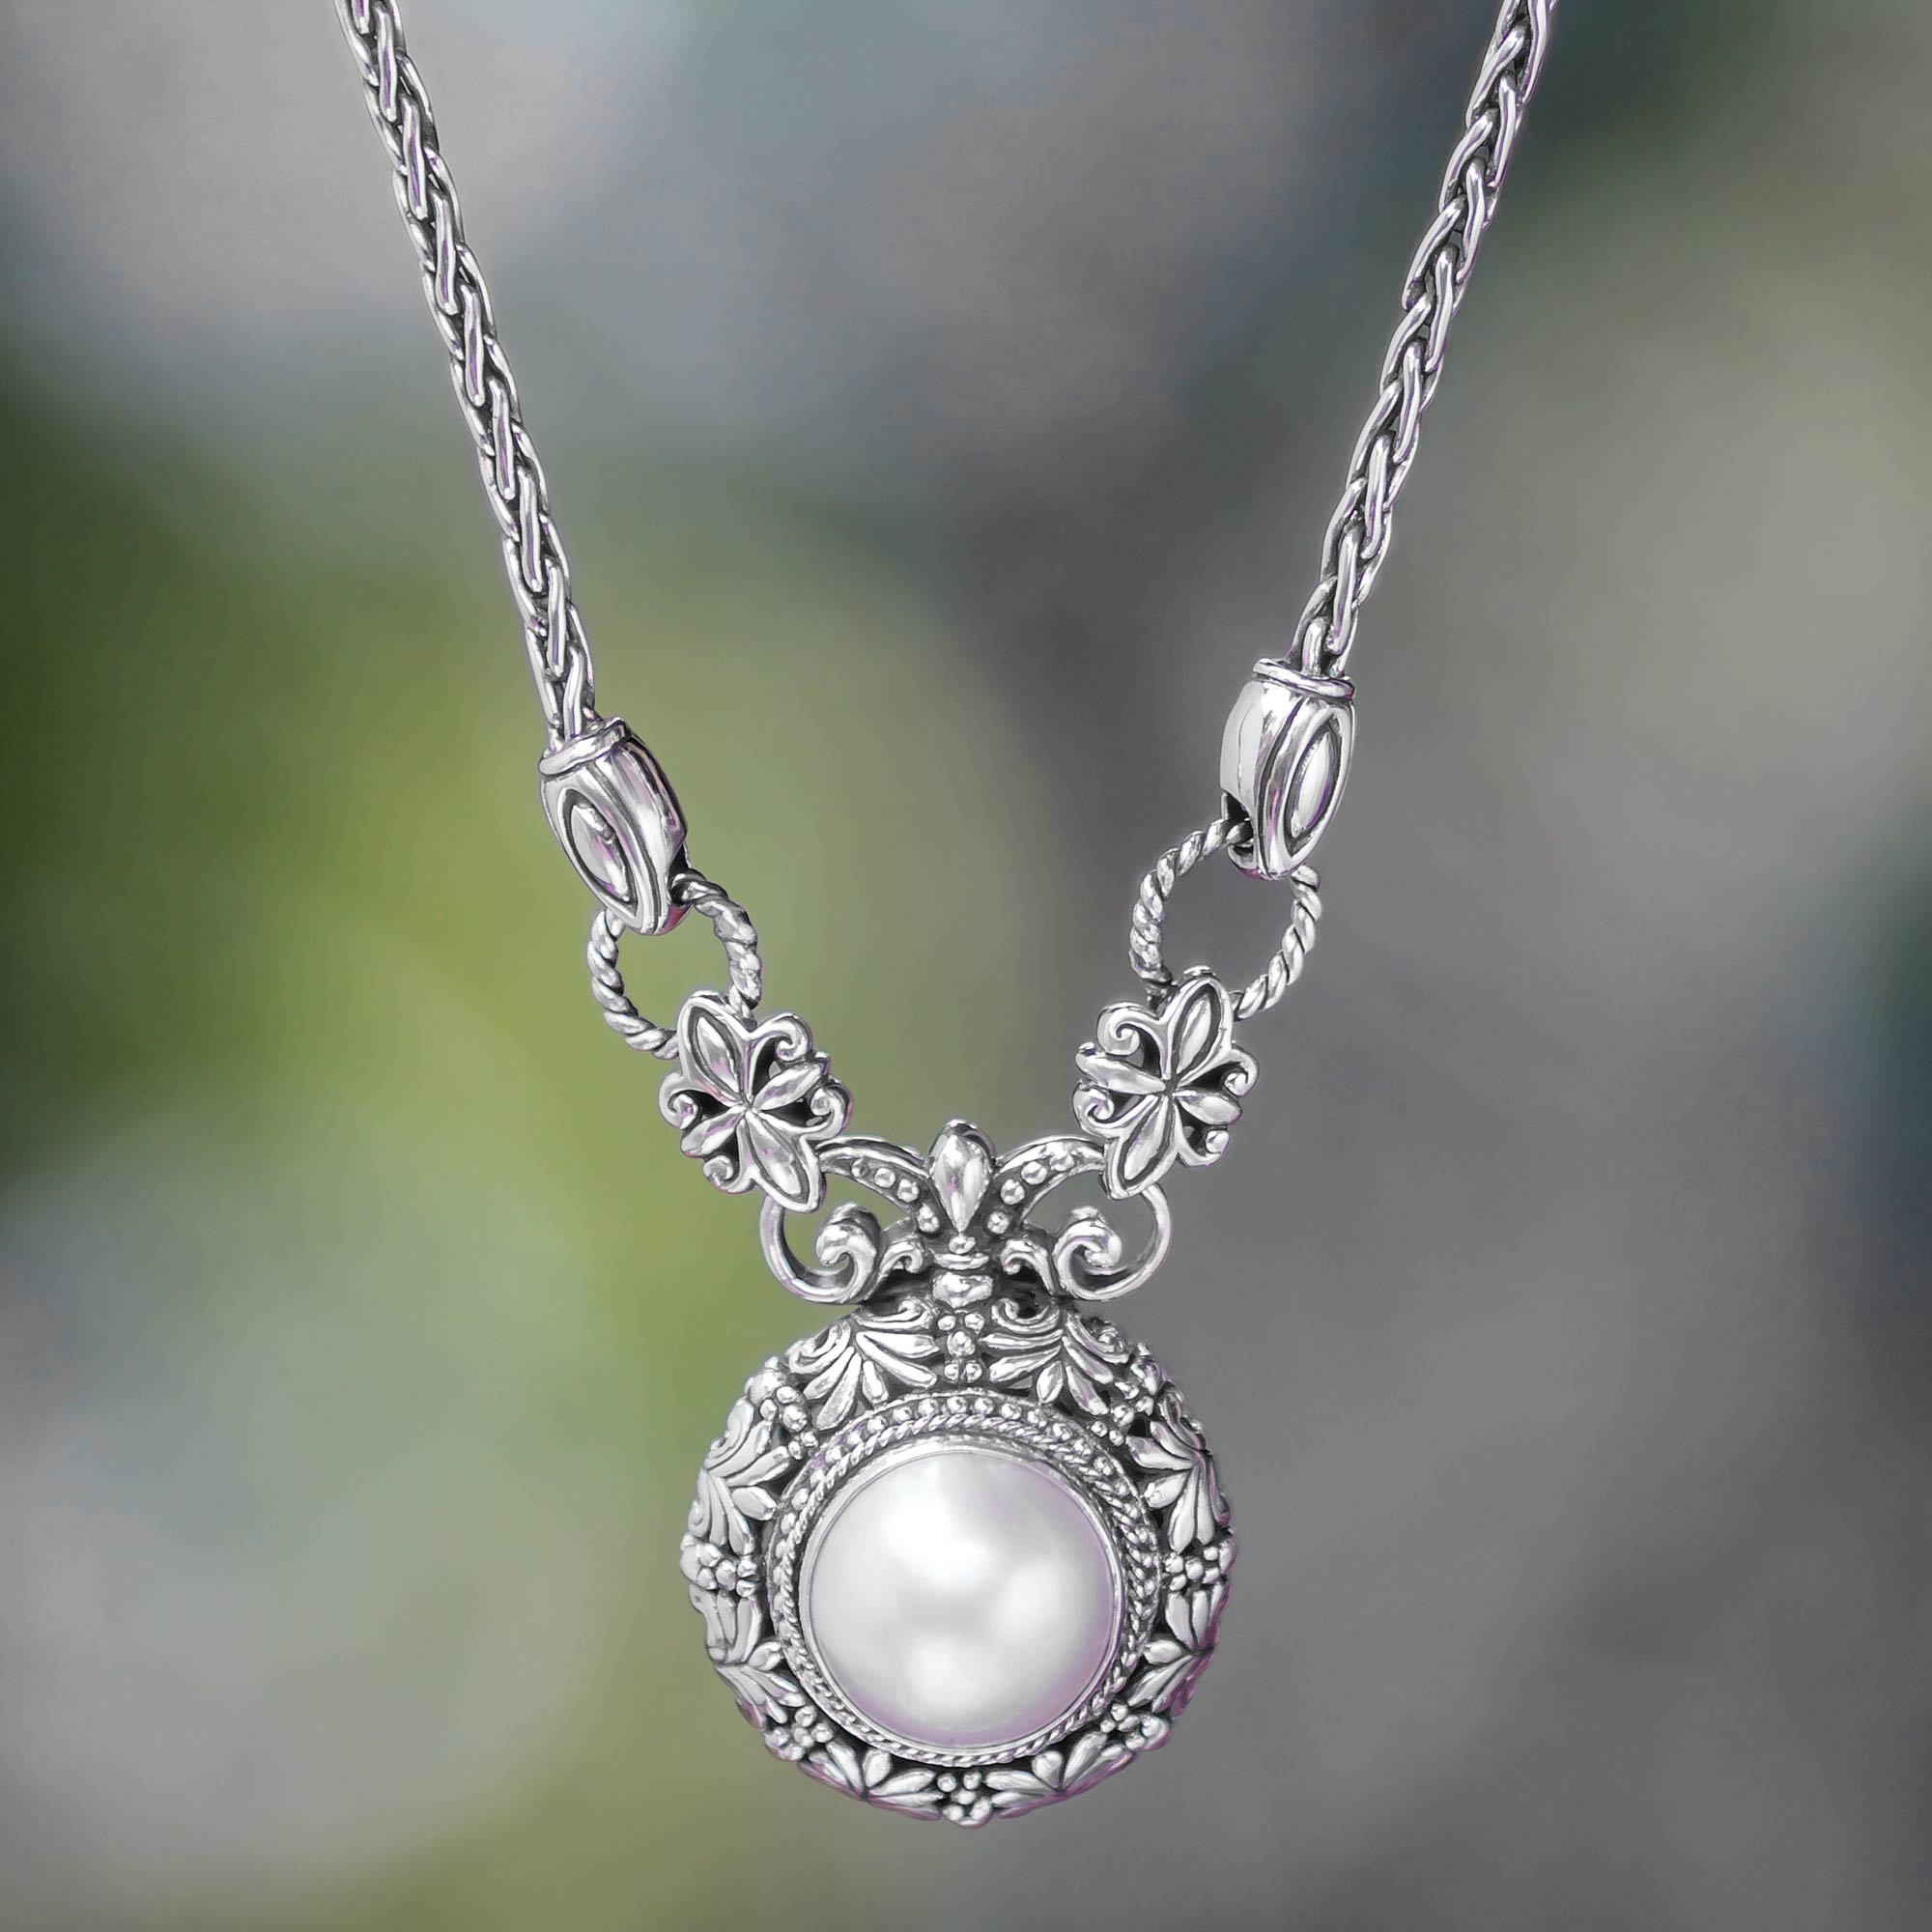 Cultured Pearl and Sterling Silver Pendant Necklace - Hapsari | NOVICA